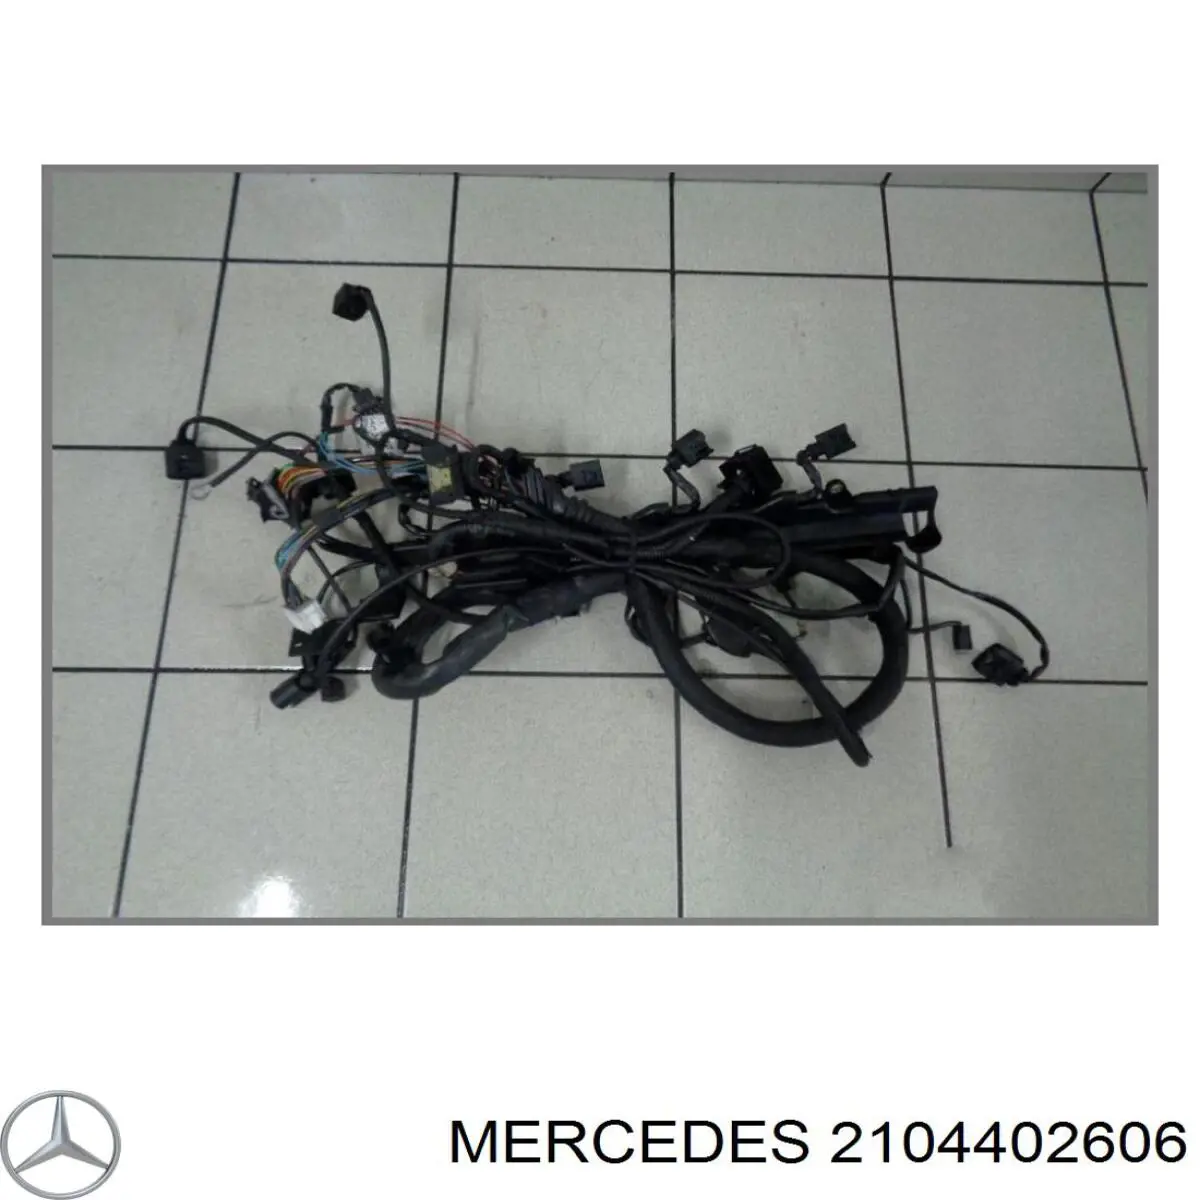 A2104402606 Mercedes mazo de cables del compartimento del motor